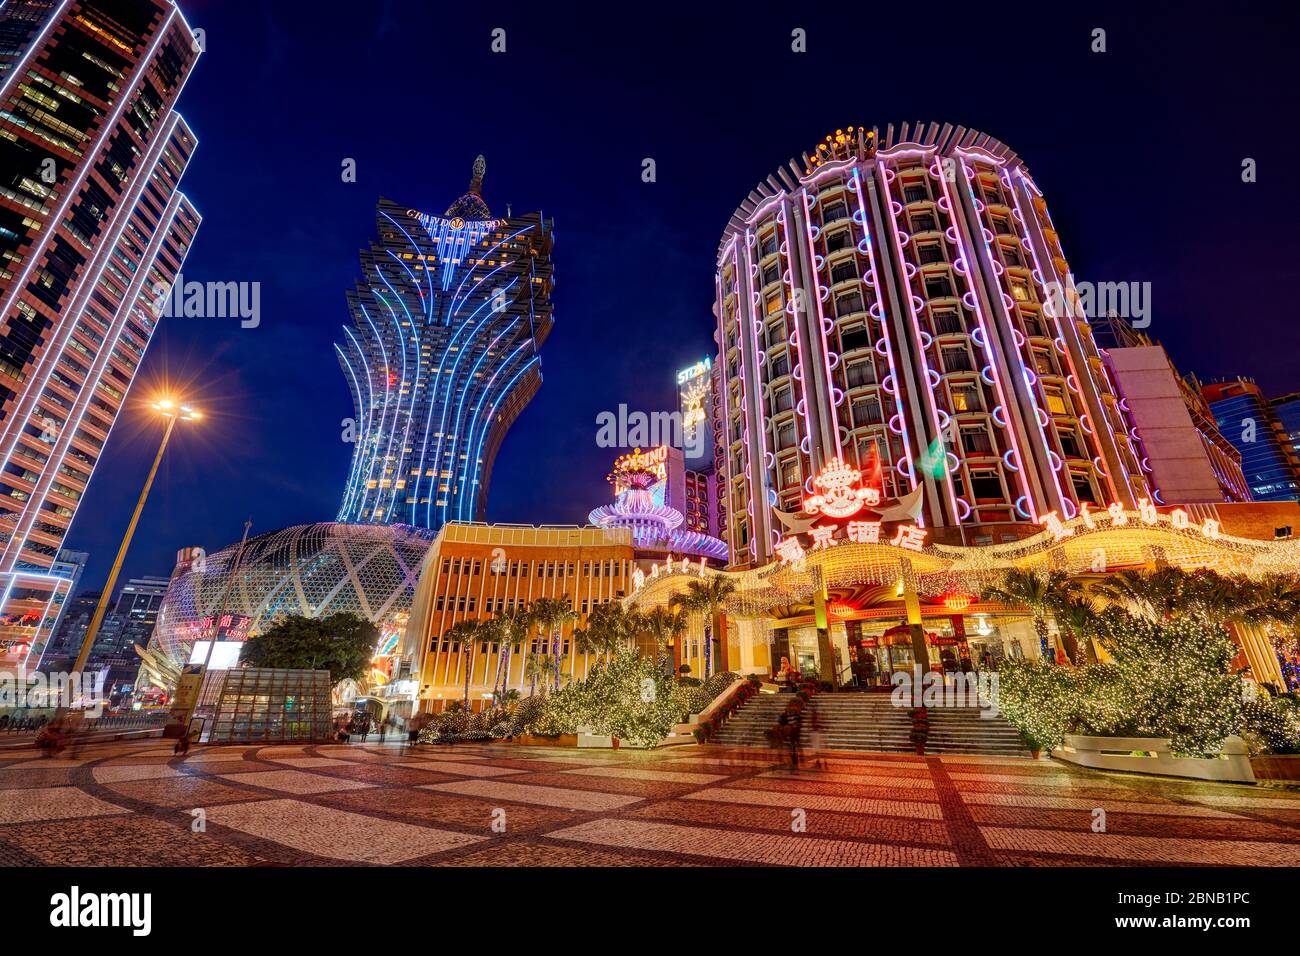 Hotels Lisboa und Grand Lisboa bei Nacht beleuchtet. Macau, China. Stockfoto